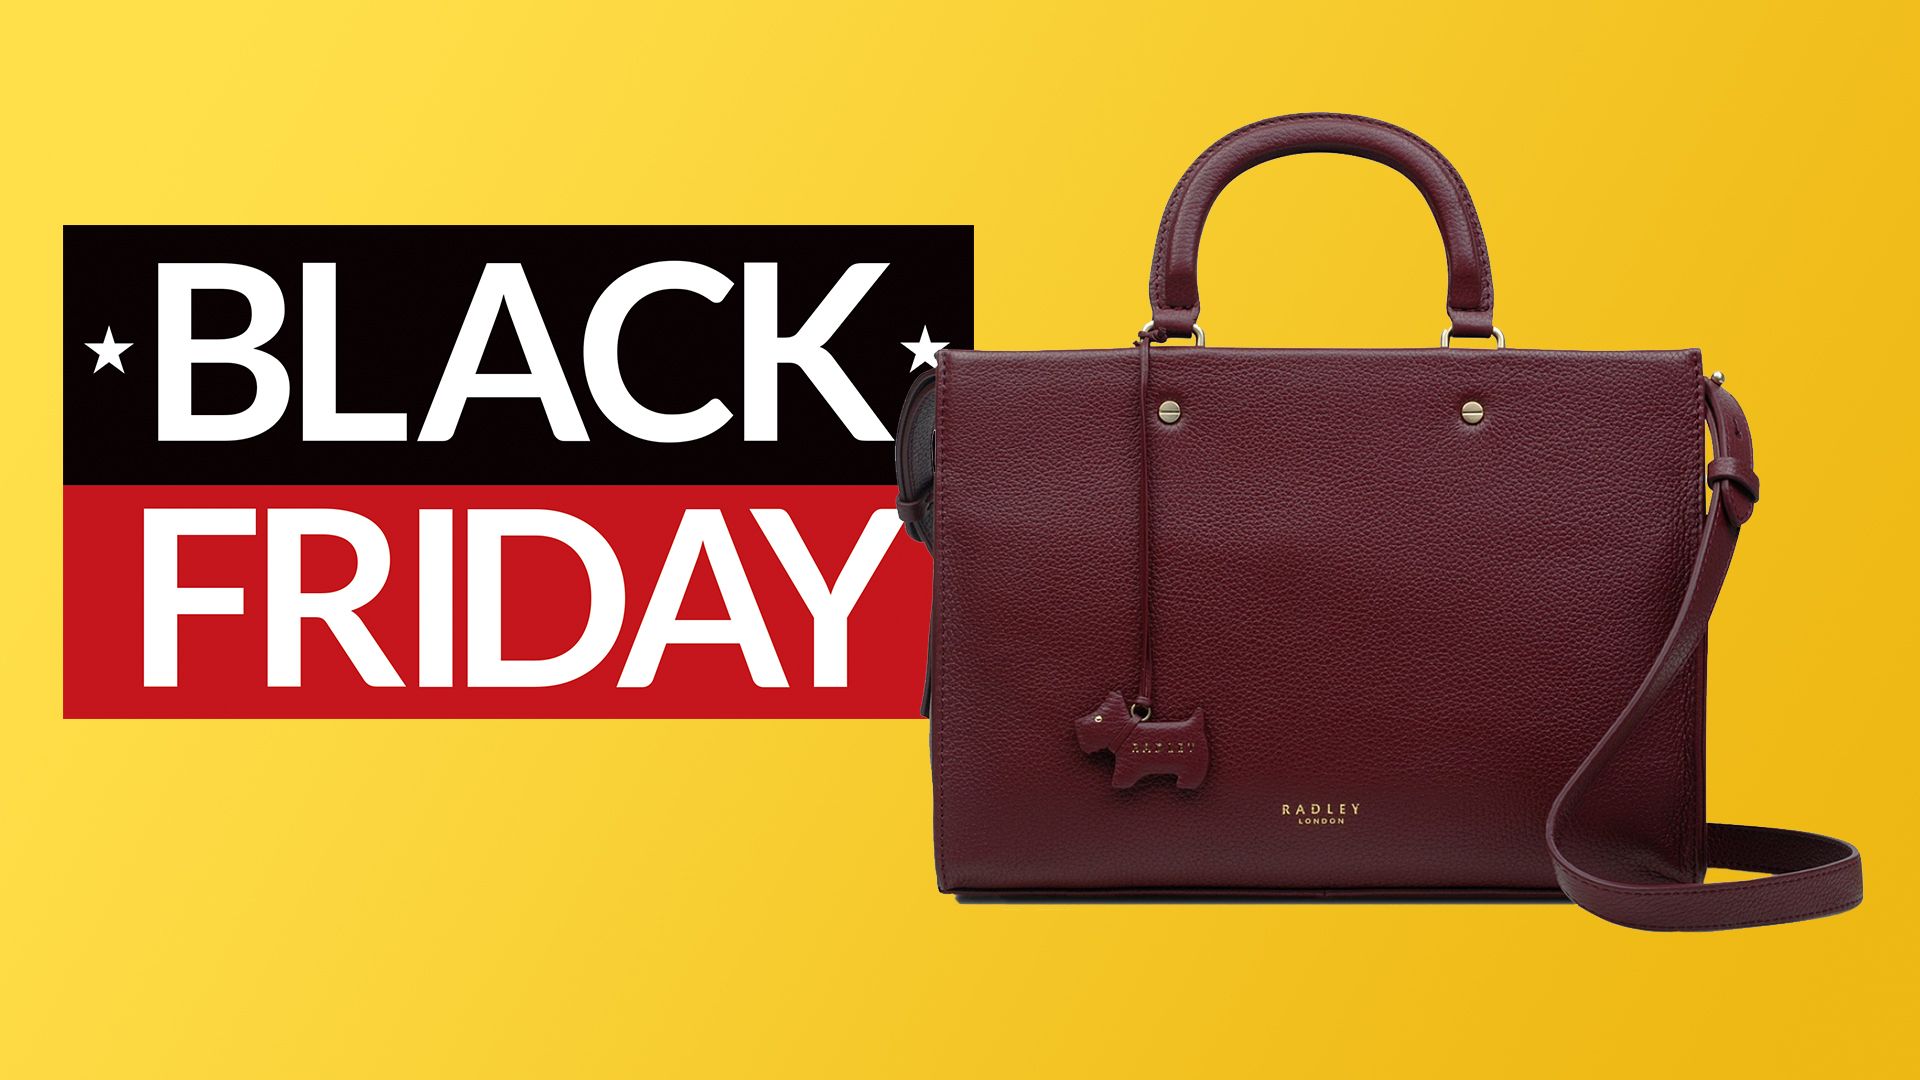 Black Friday handbags deal: save up to 50% at Radley | T3